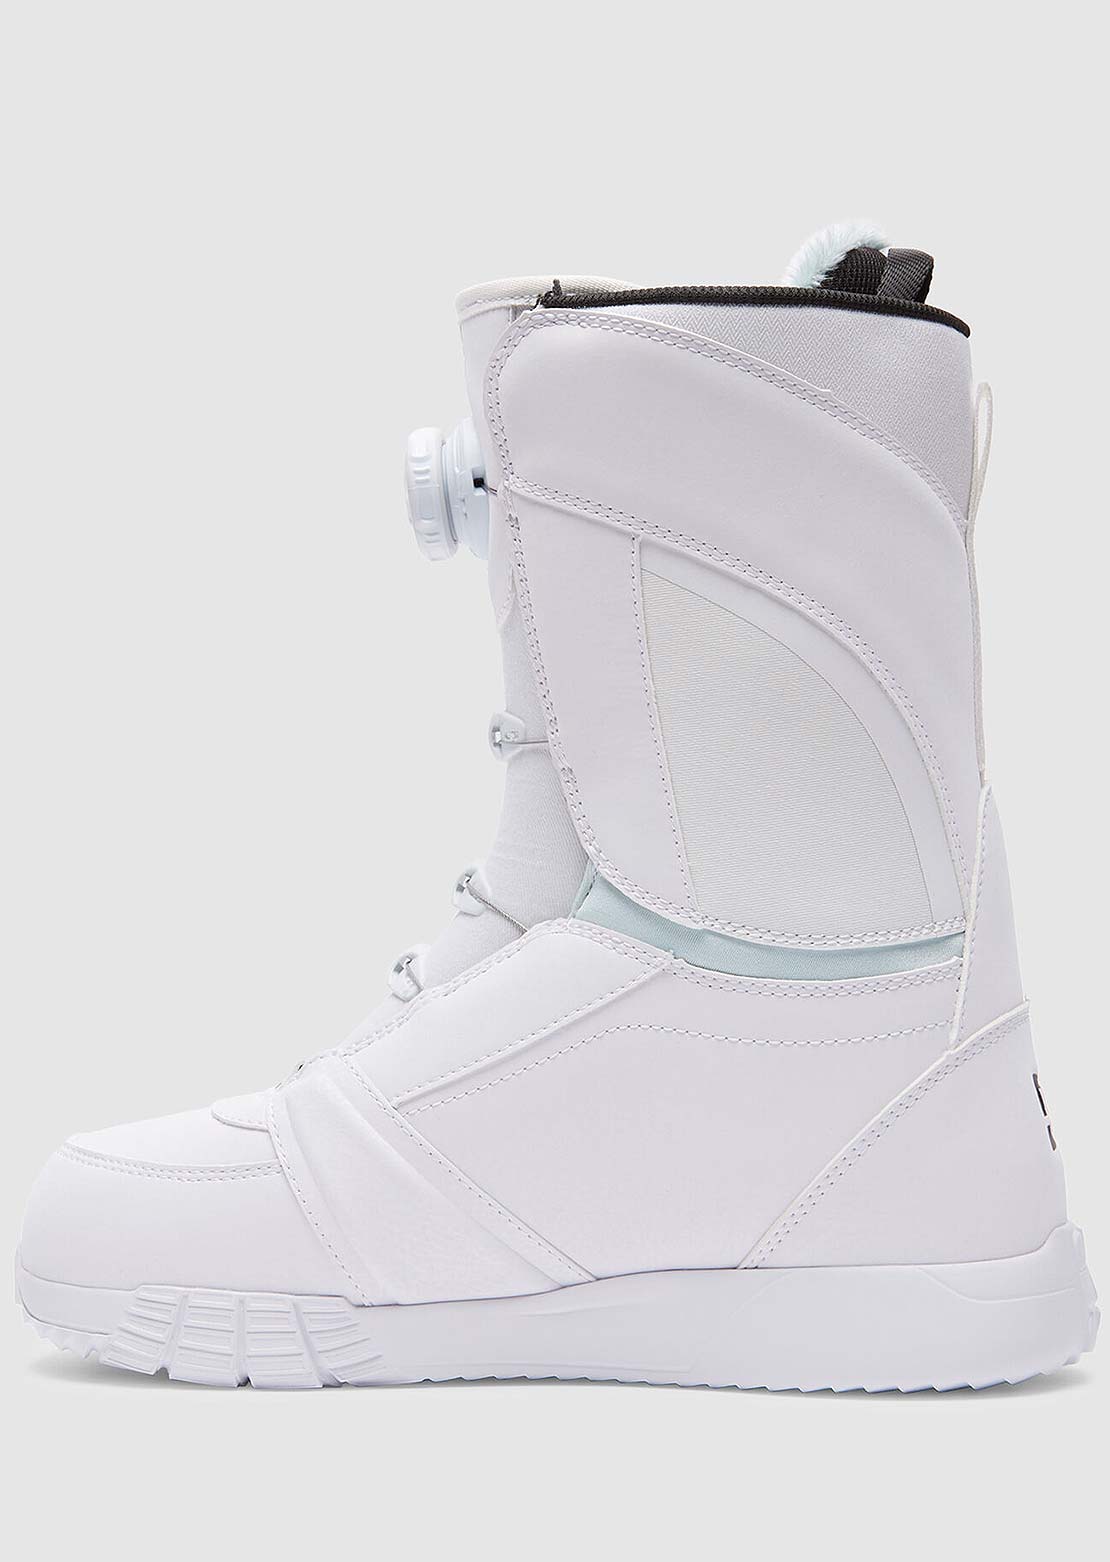 DC Women&#39;s Lotus Snowboard Boots White/White/Black